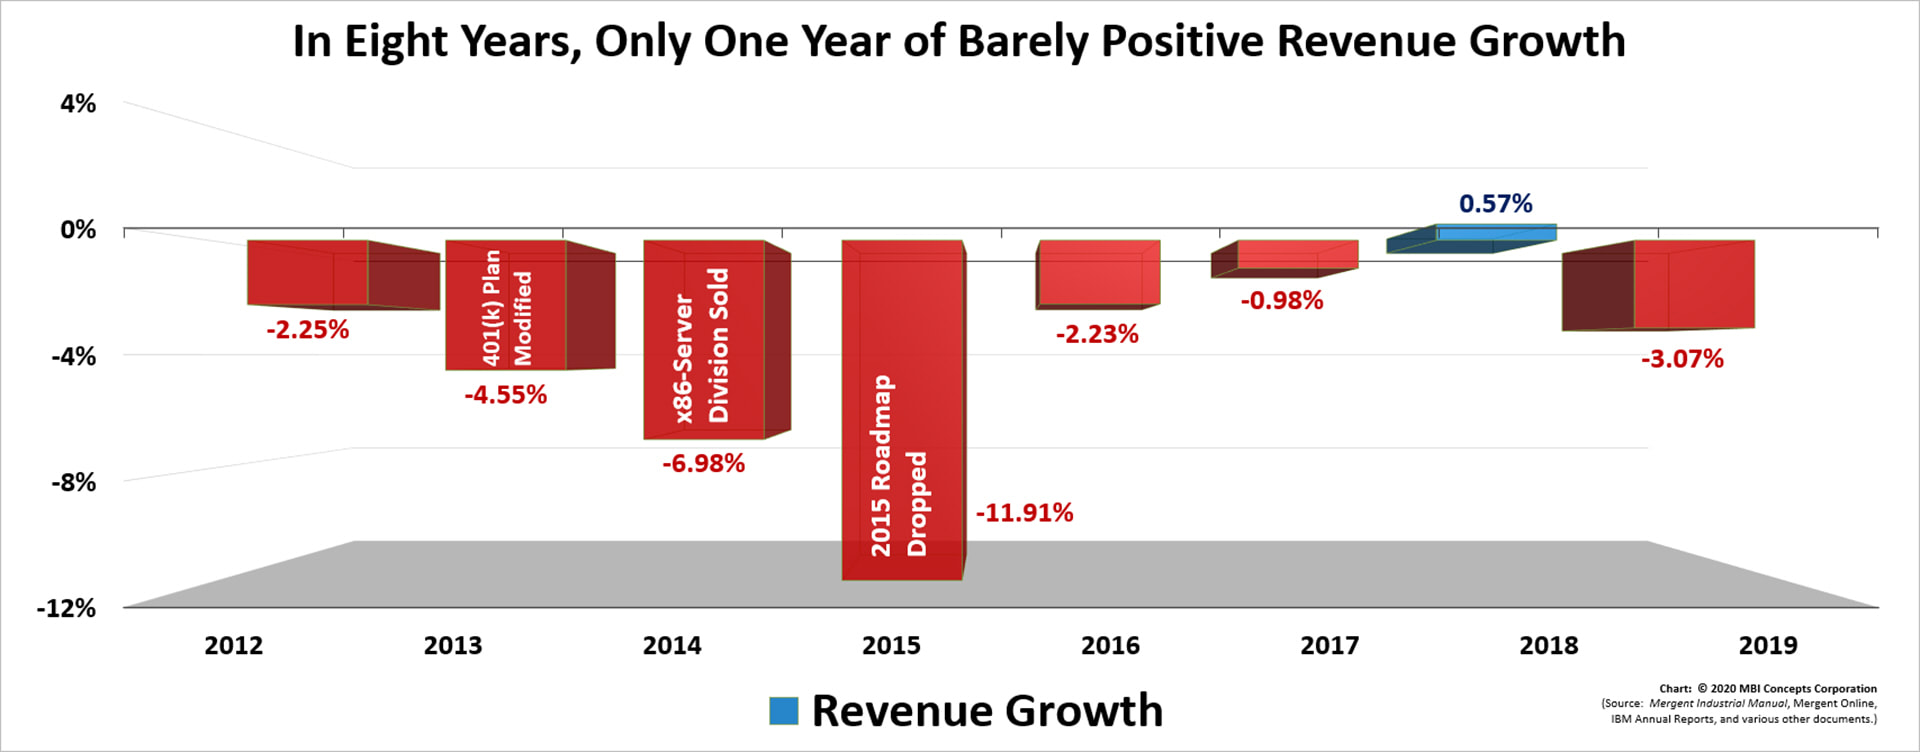 Virginia M. (Ginni) Rometty's Revenue Growth Performance as IBM's CEO: 2012 through 2019.